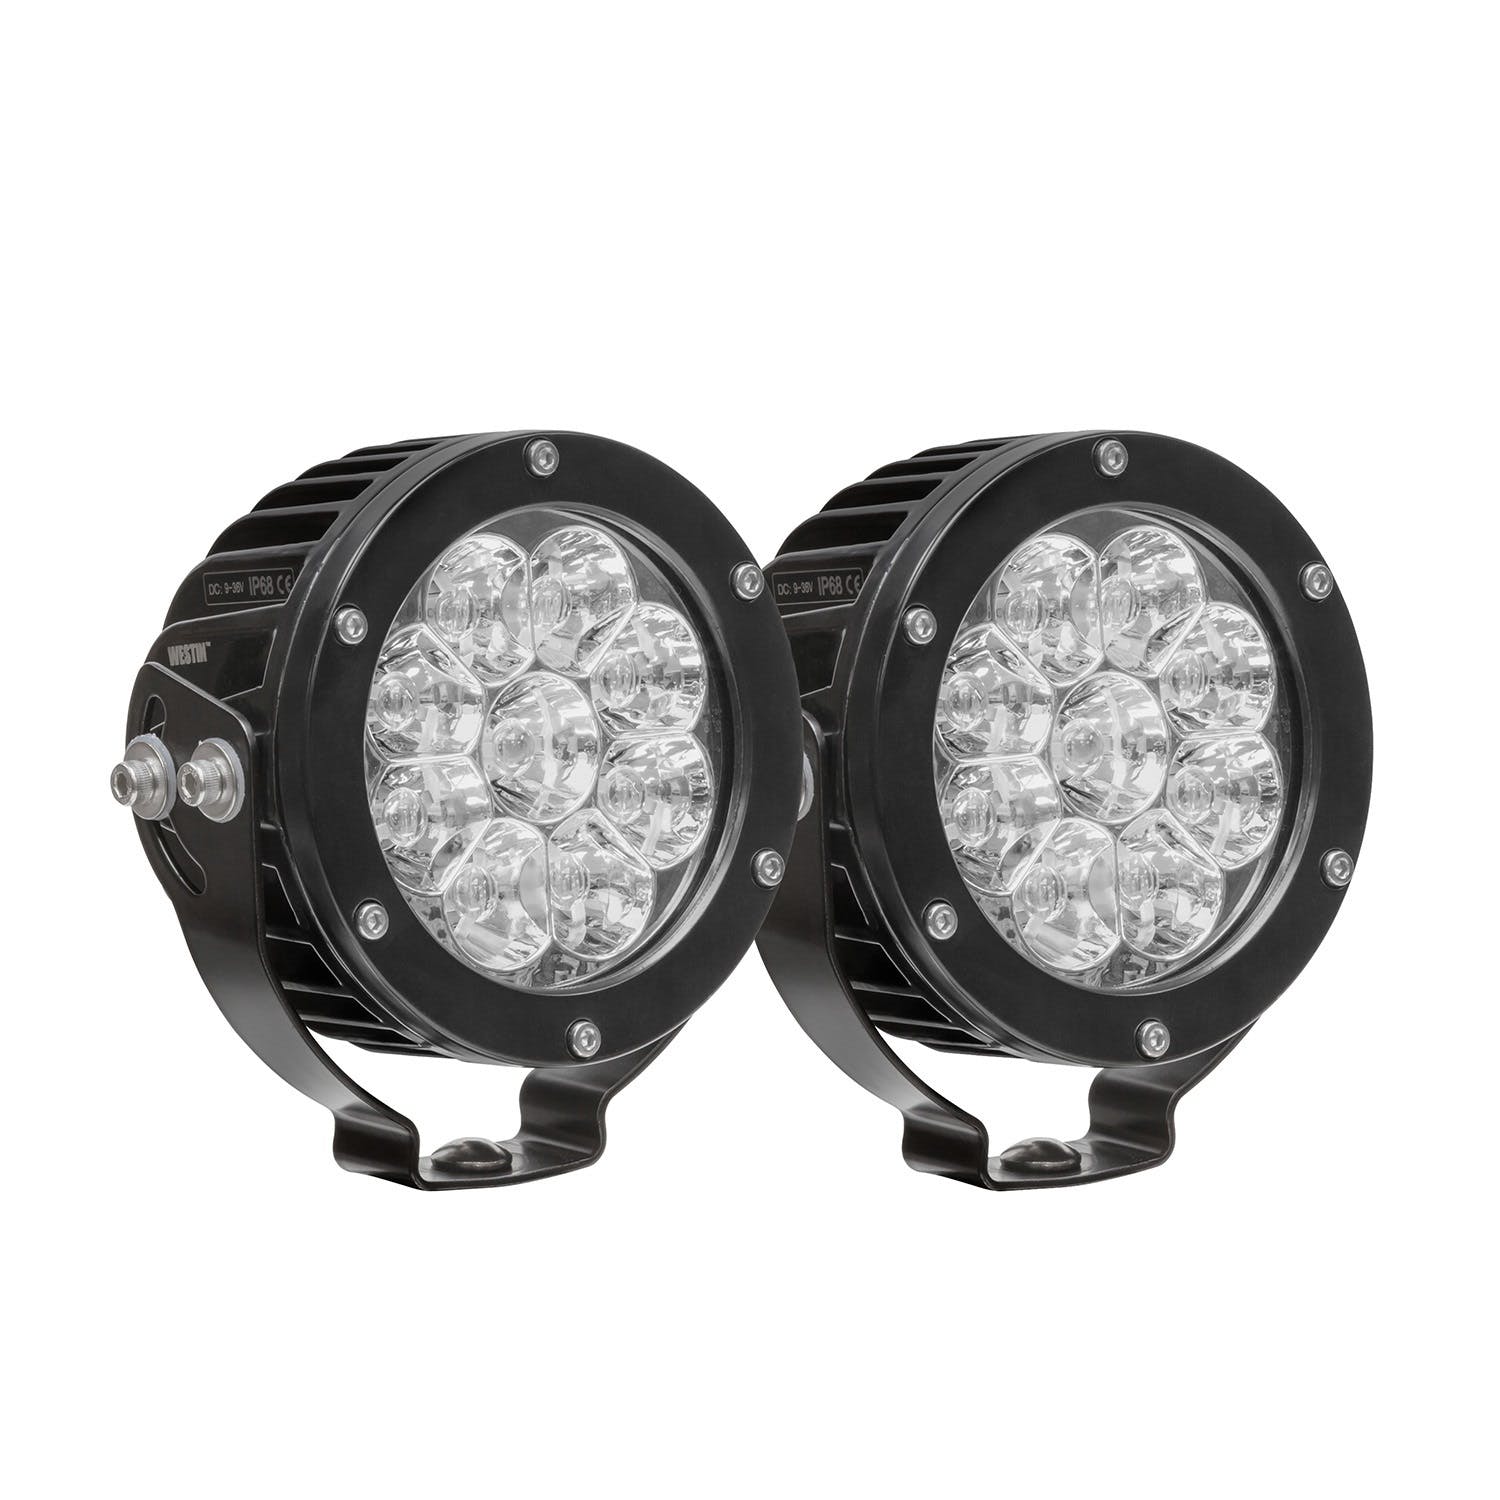 Westin Automotive 09-12007A-PR LED Auxiliary Light 4.75 inch Round Spot with 3W Osram (Set of 2)